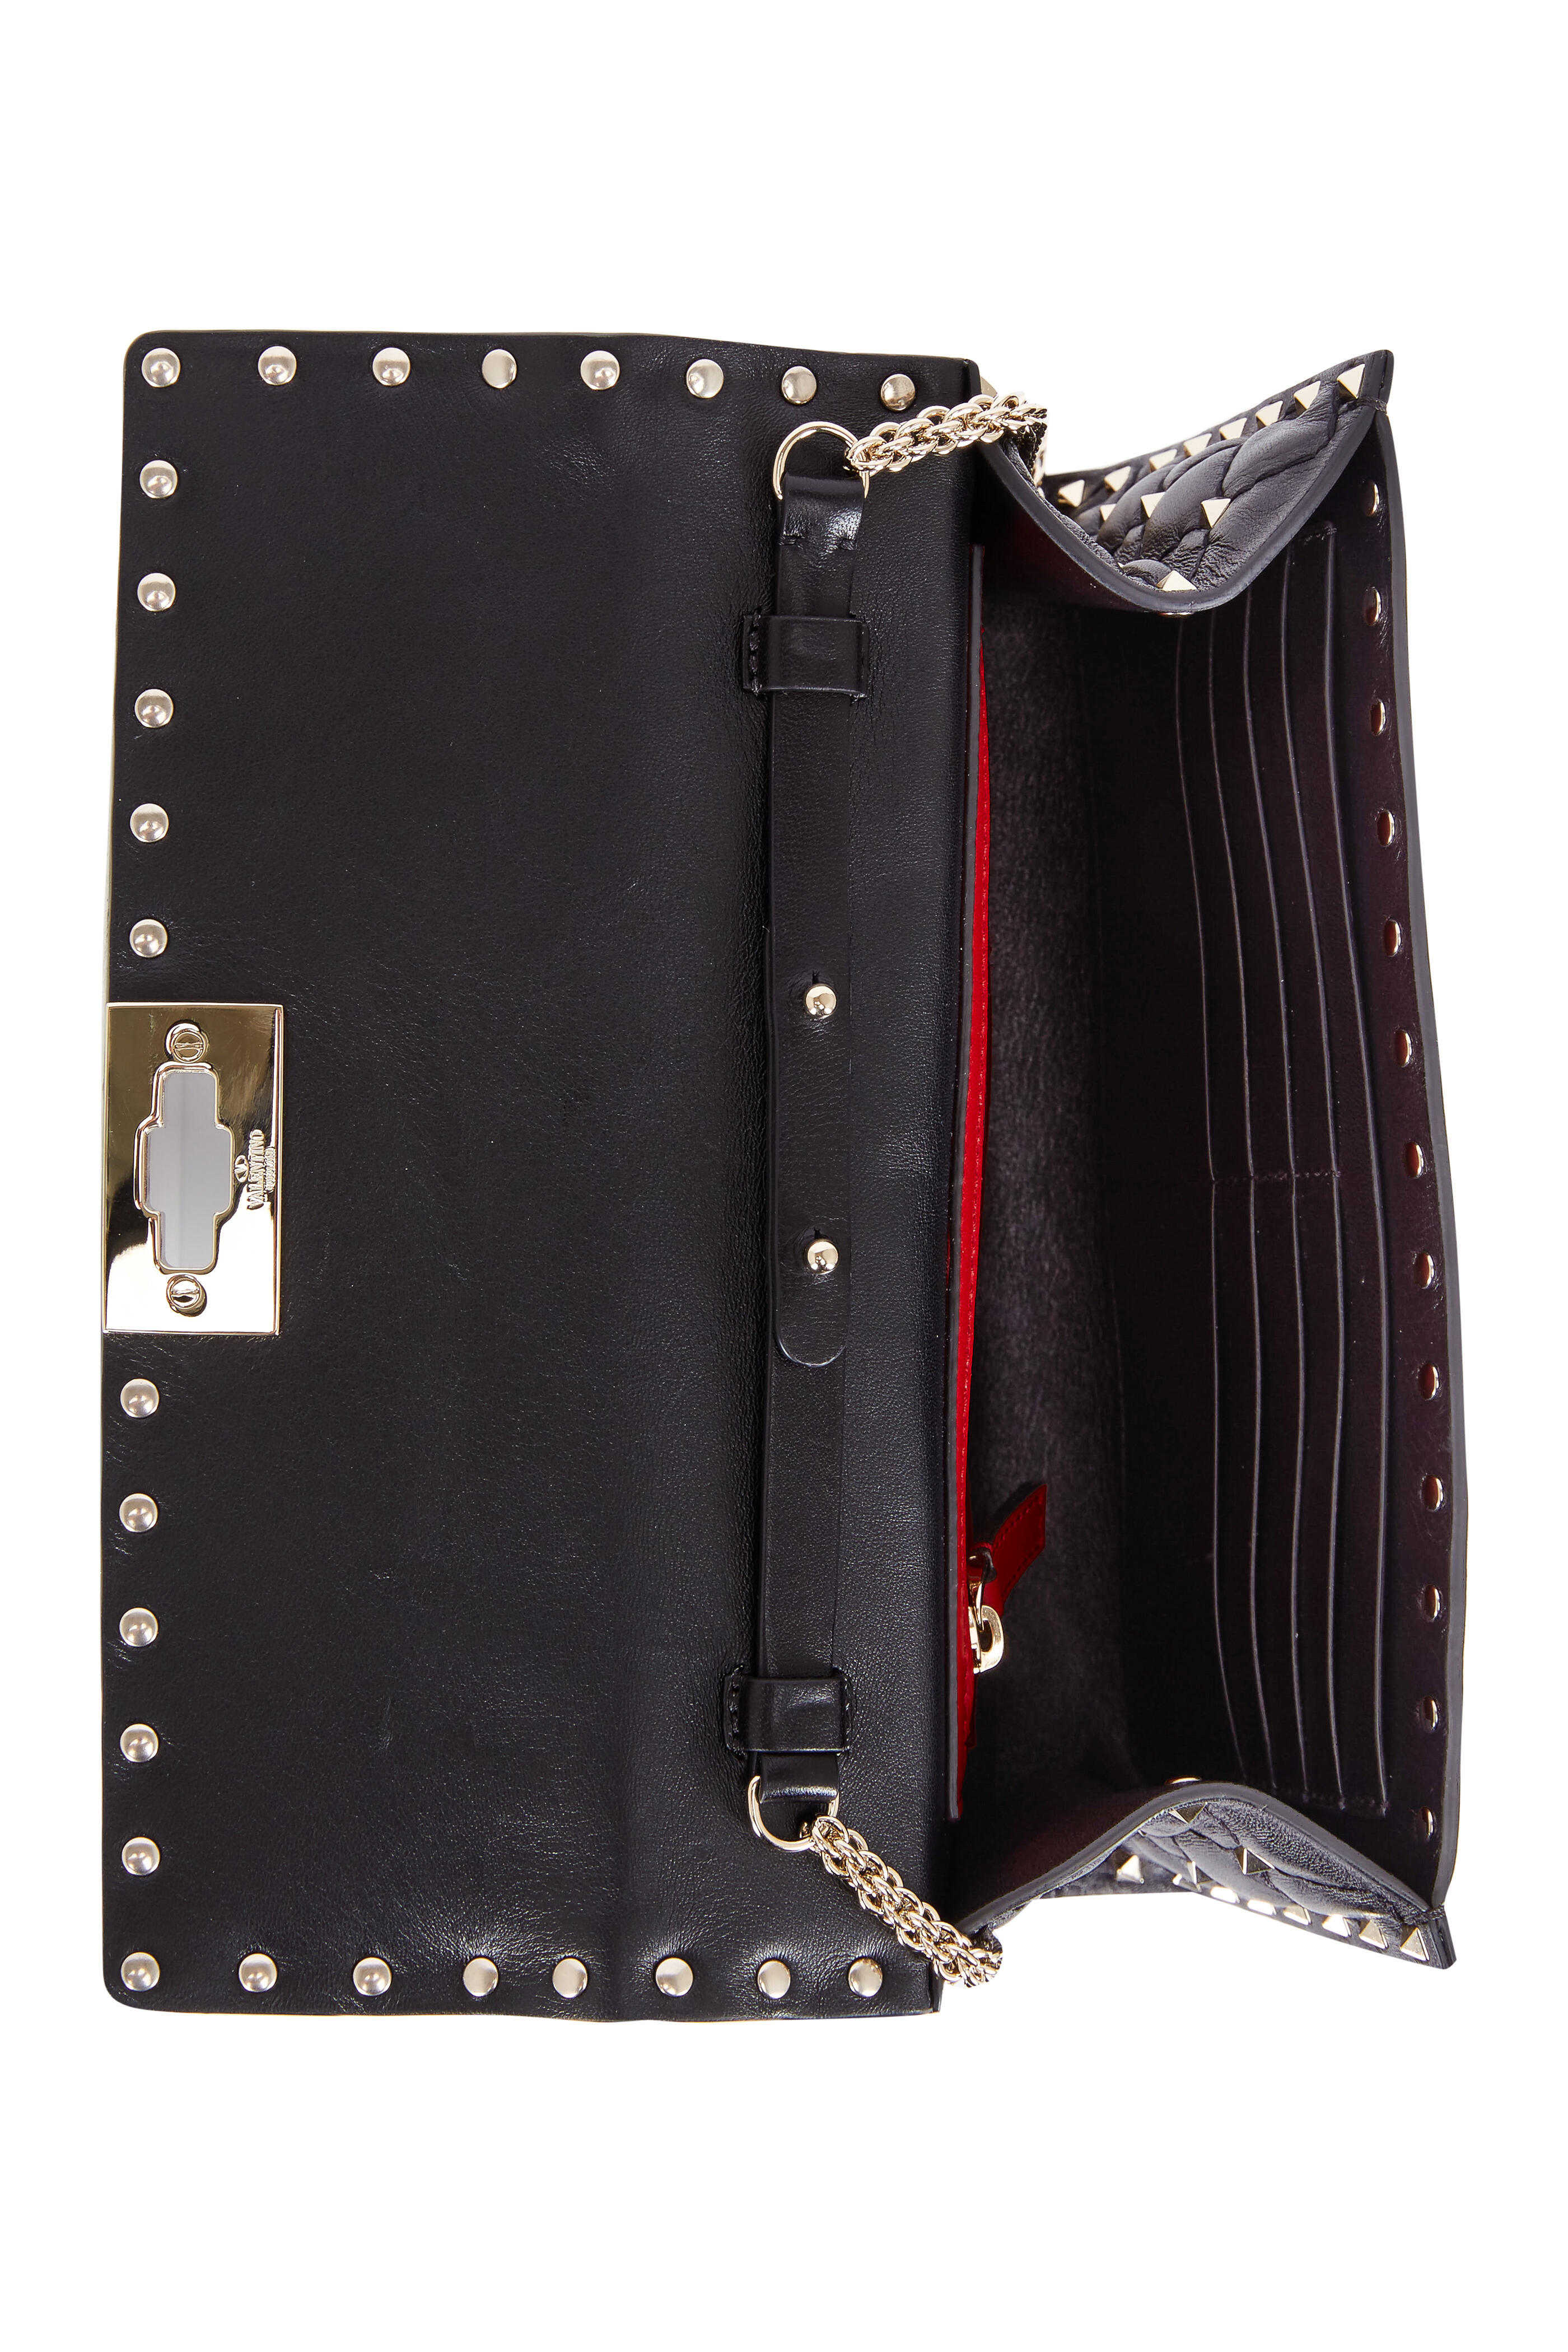 Valentino Garavani Women's Rockstud Black Leather Chain Crossbody Bag | by Mitchell Stores